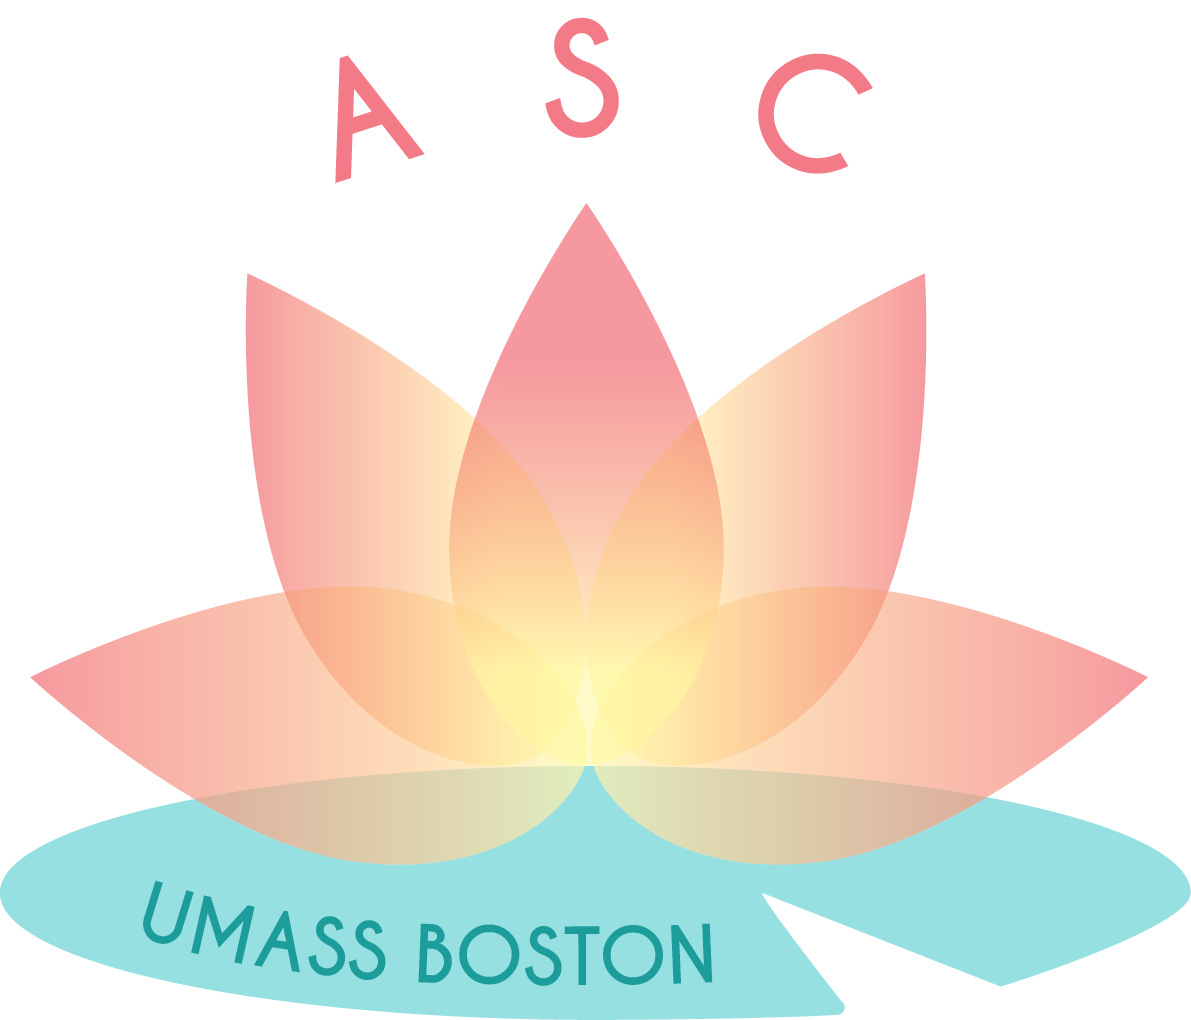 UMass Boston Asian Student Center